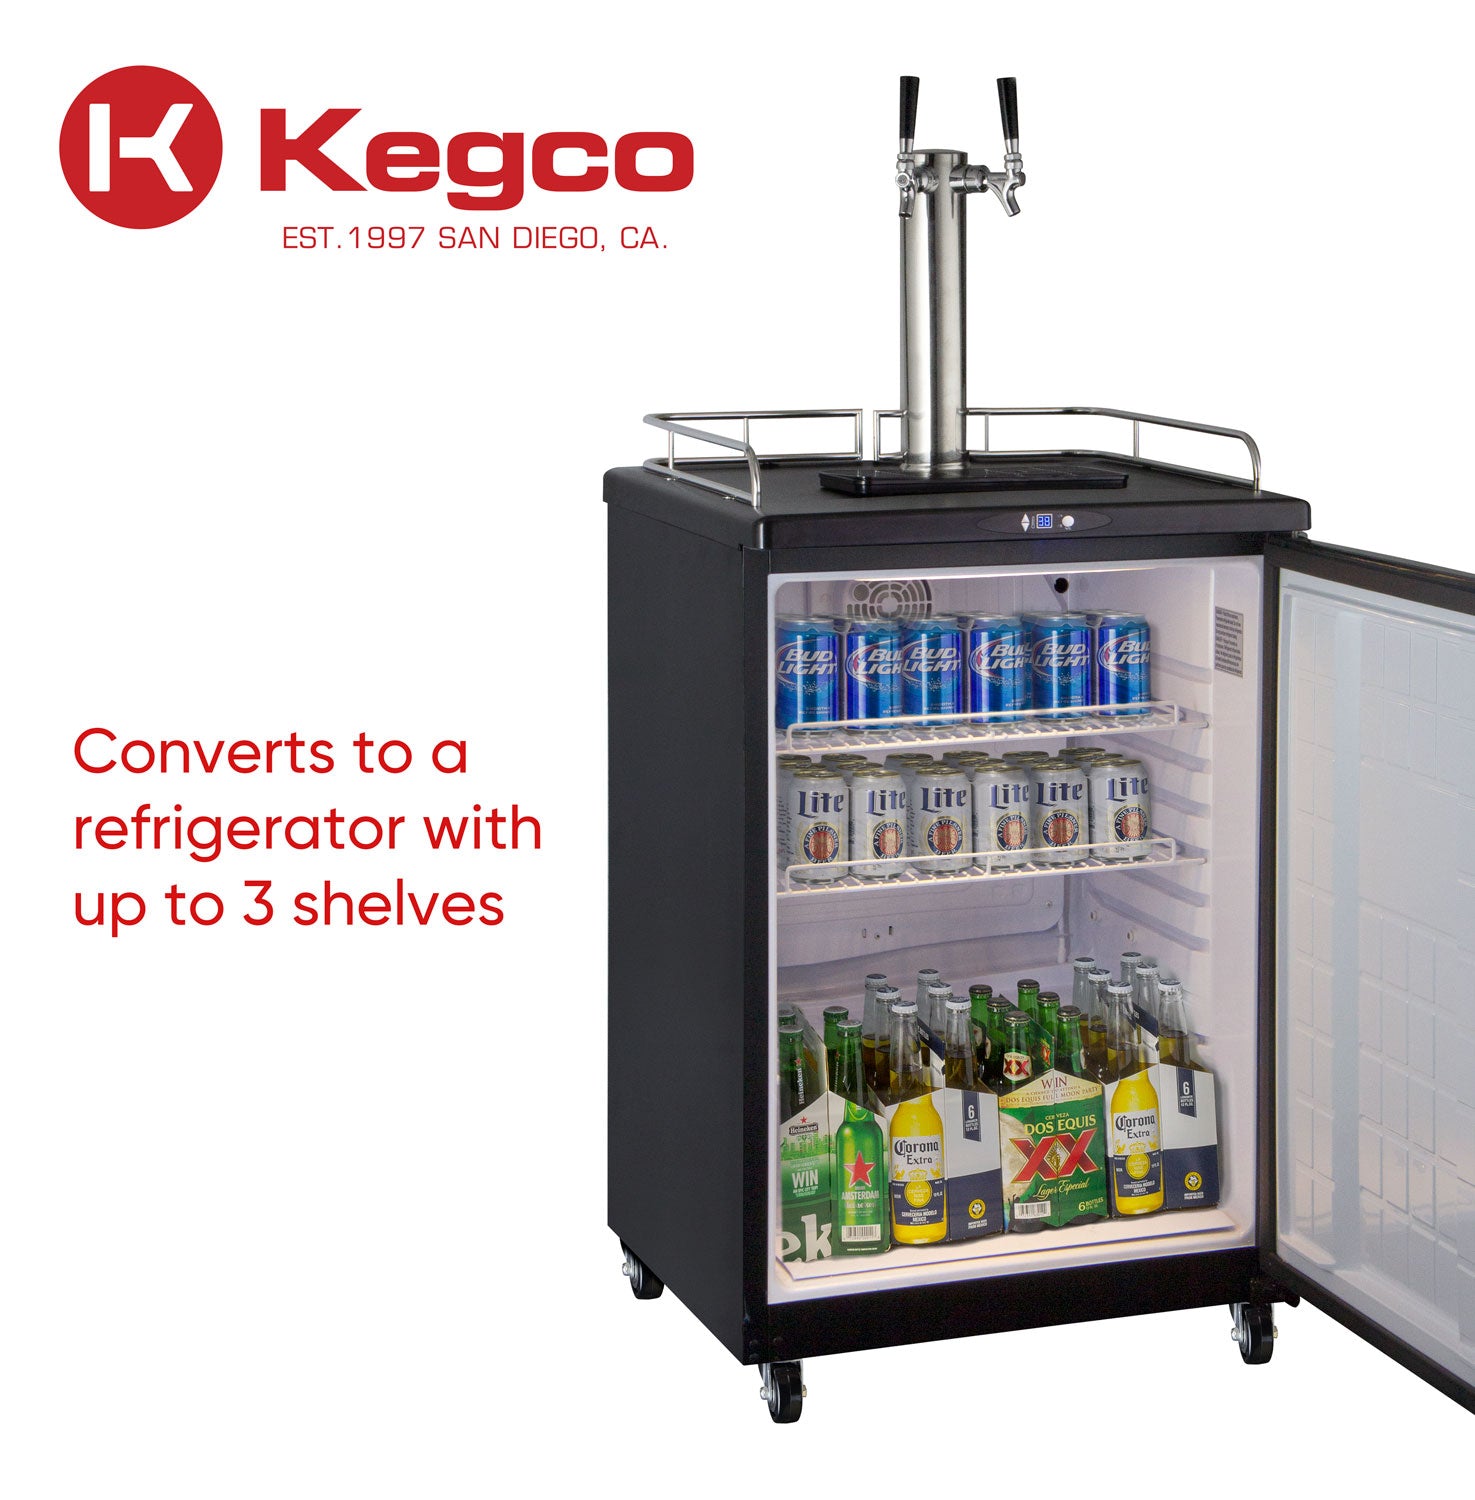 Kegco 24" Wide Dual Tap Stainless Steel Commercial/Residential Digital Kegerator